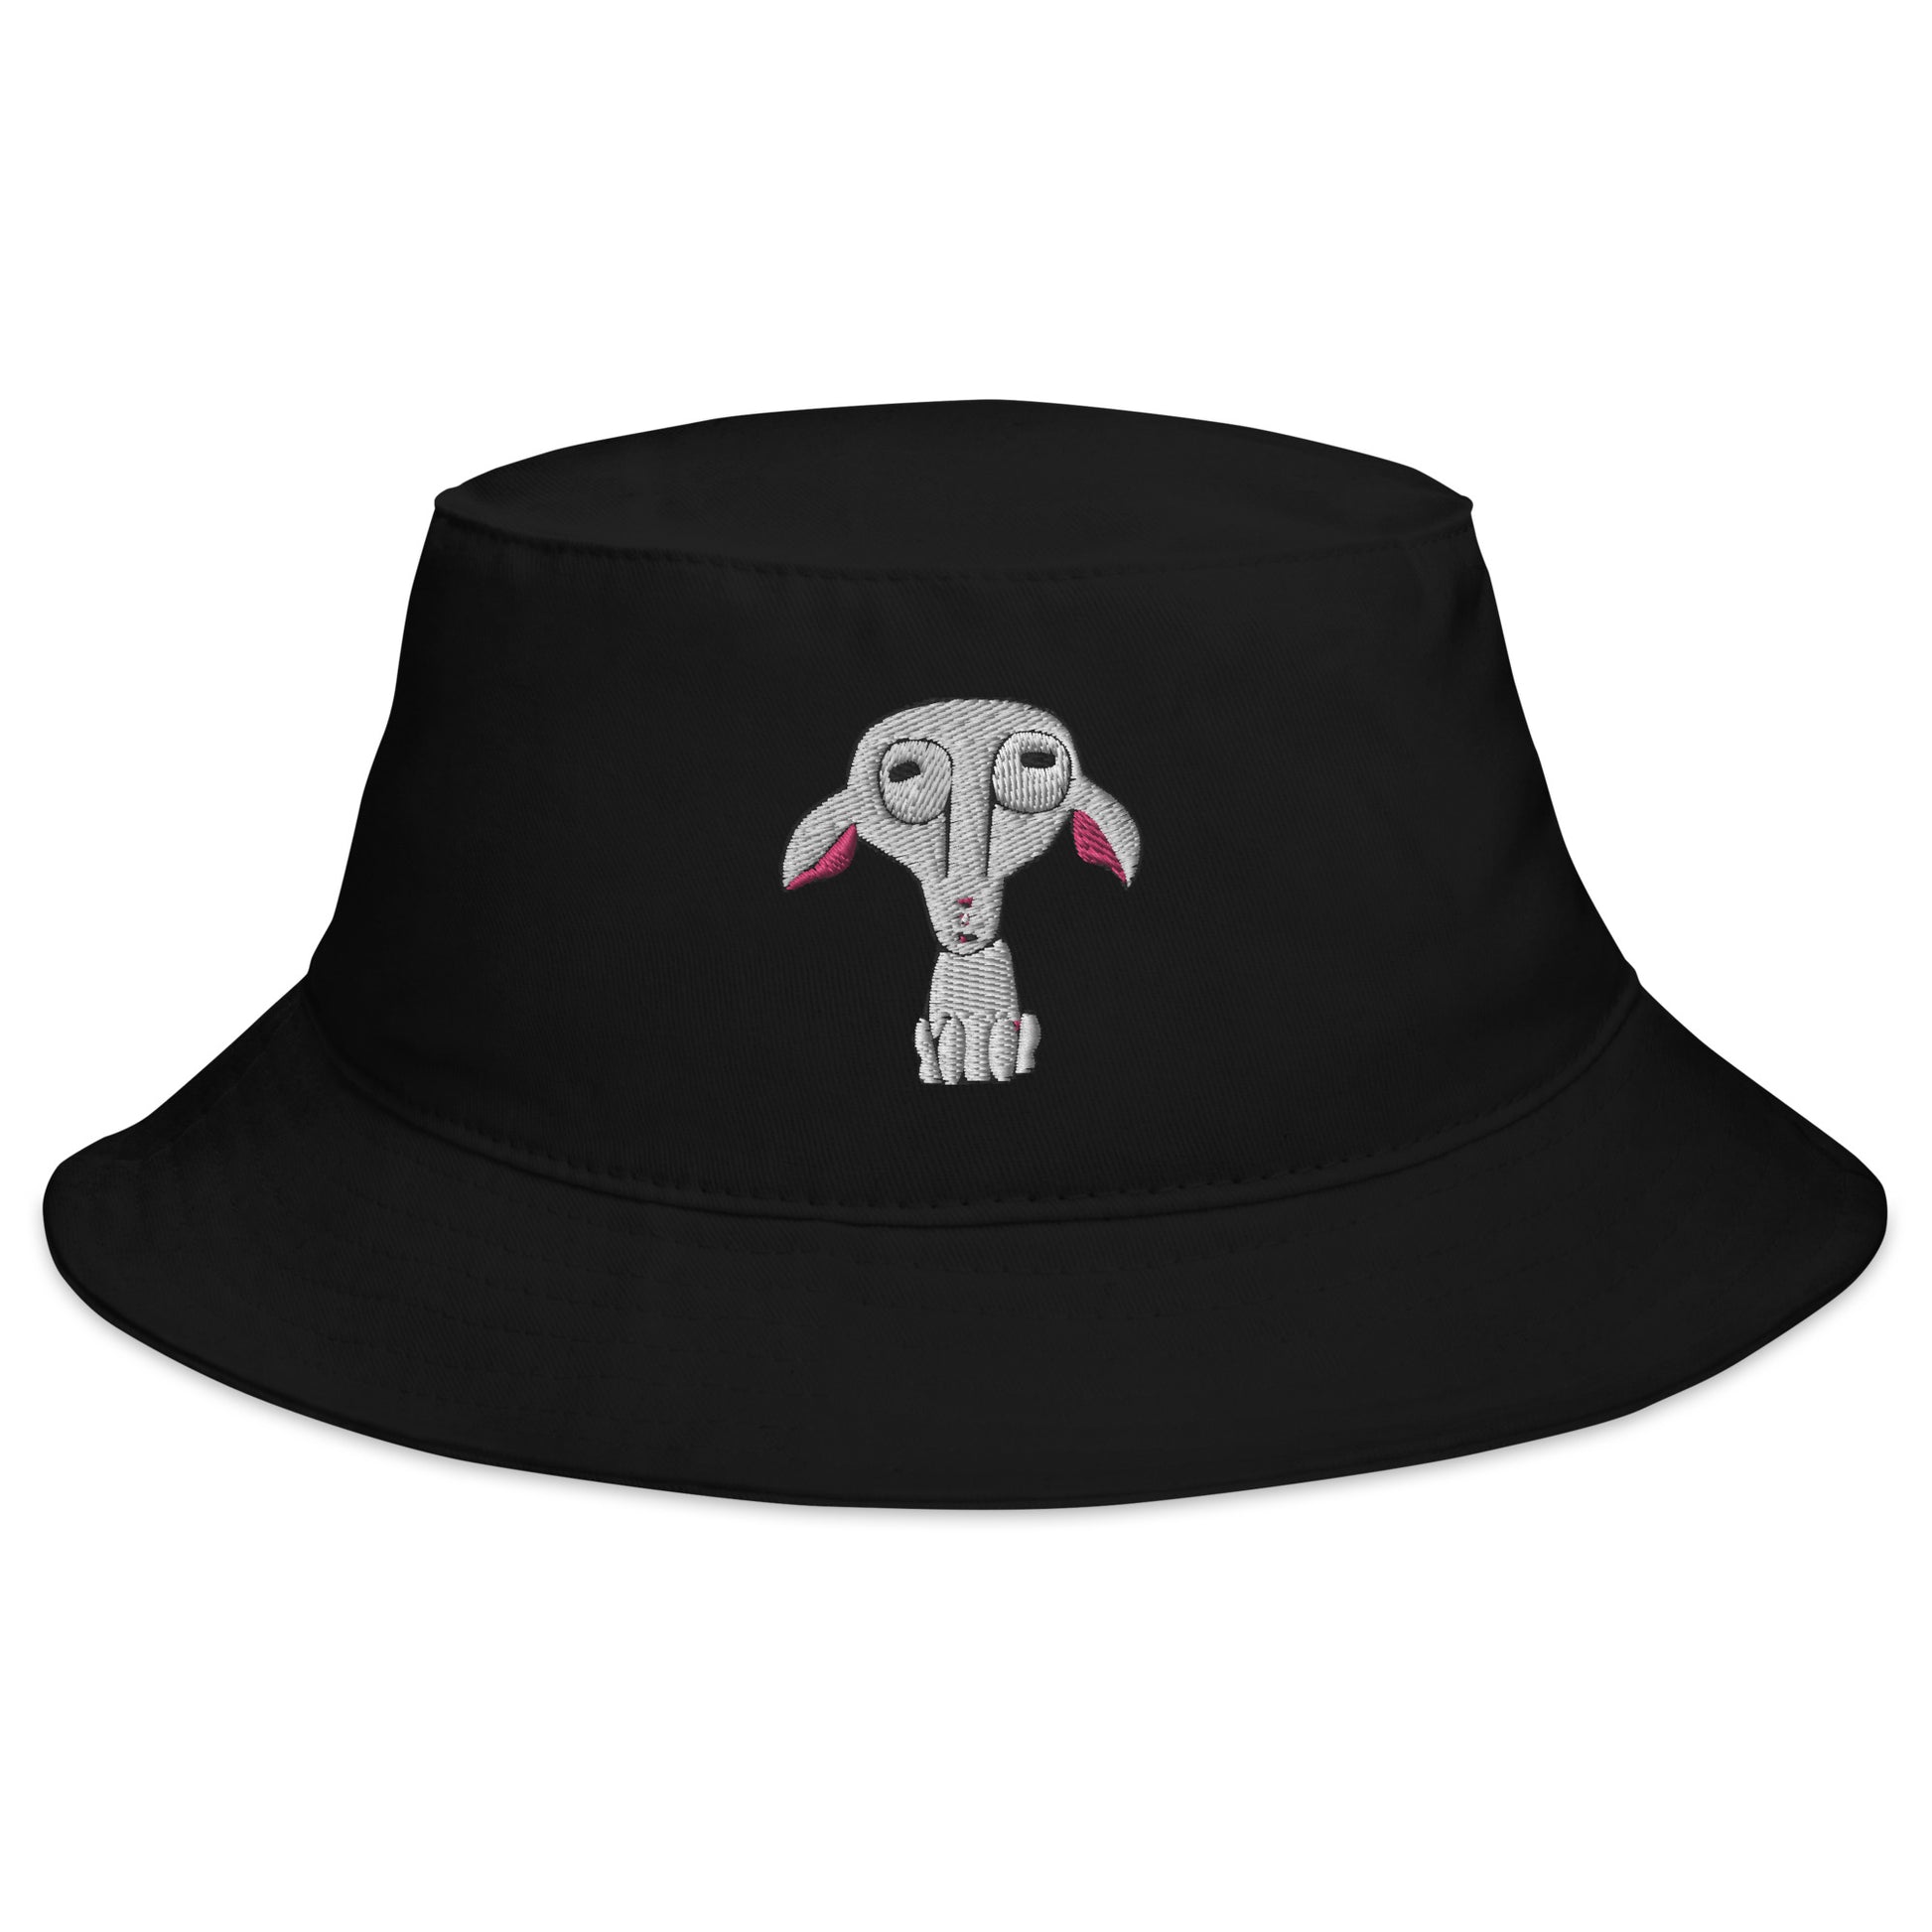 Chupis Goat Bucket Hat - Chupis